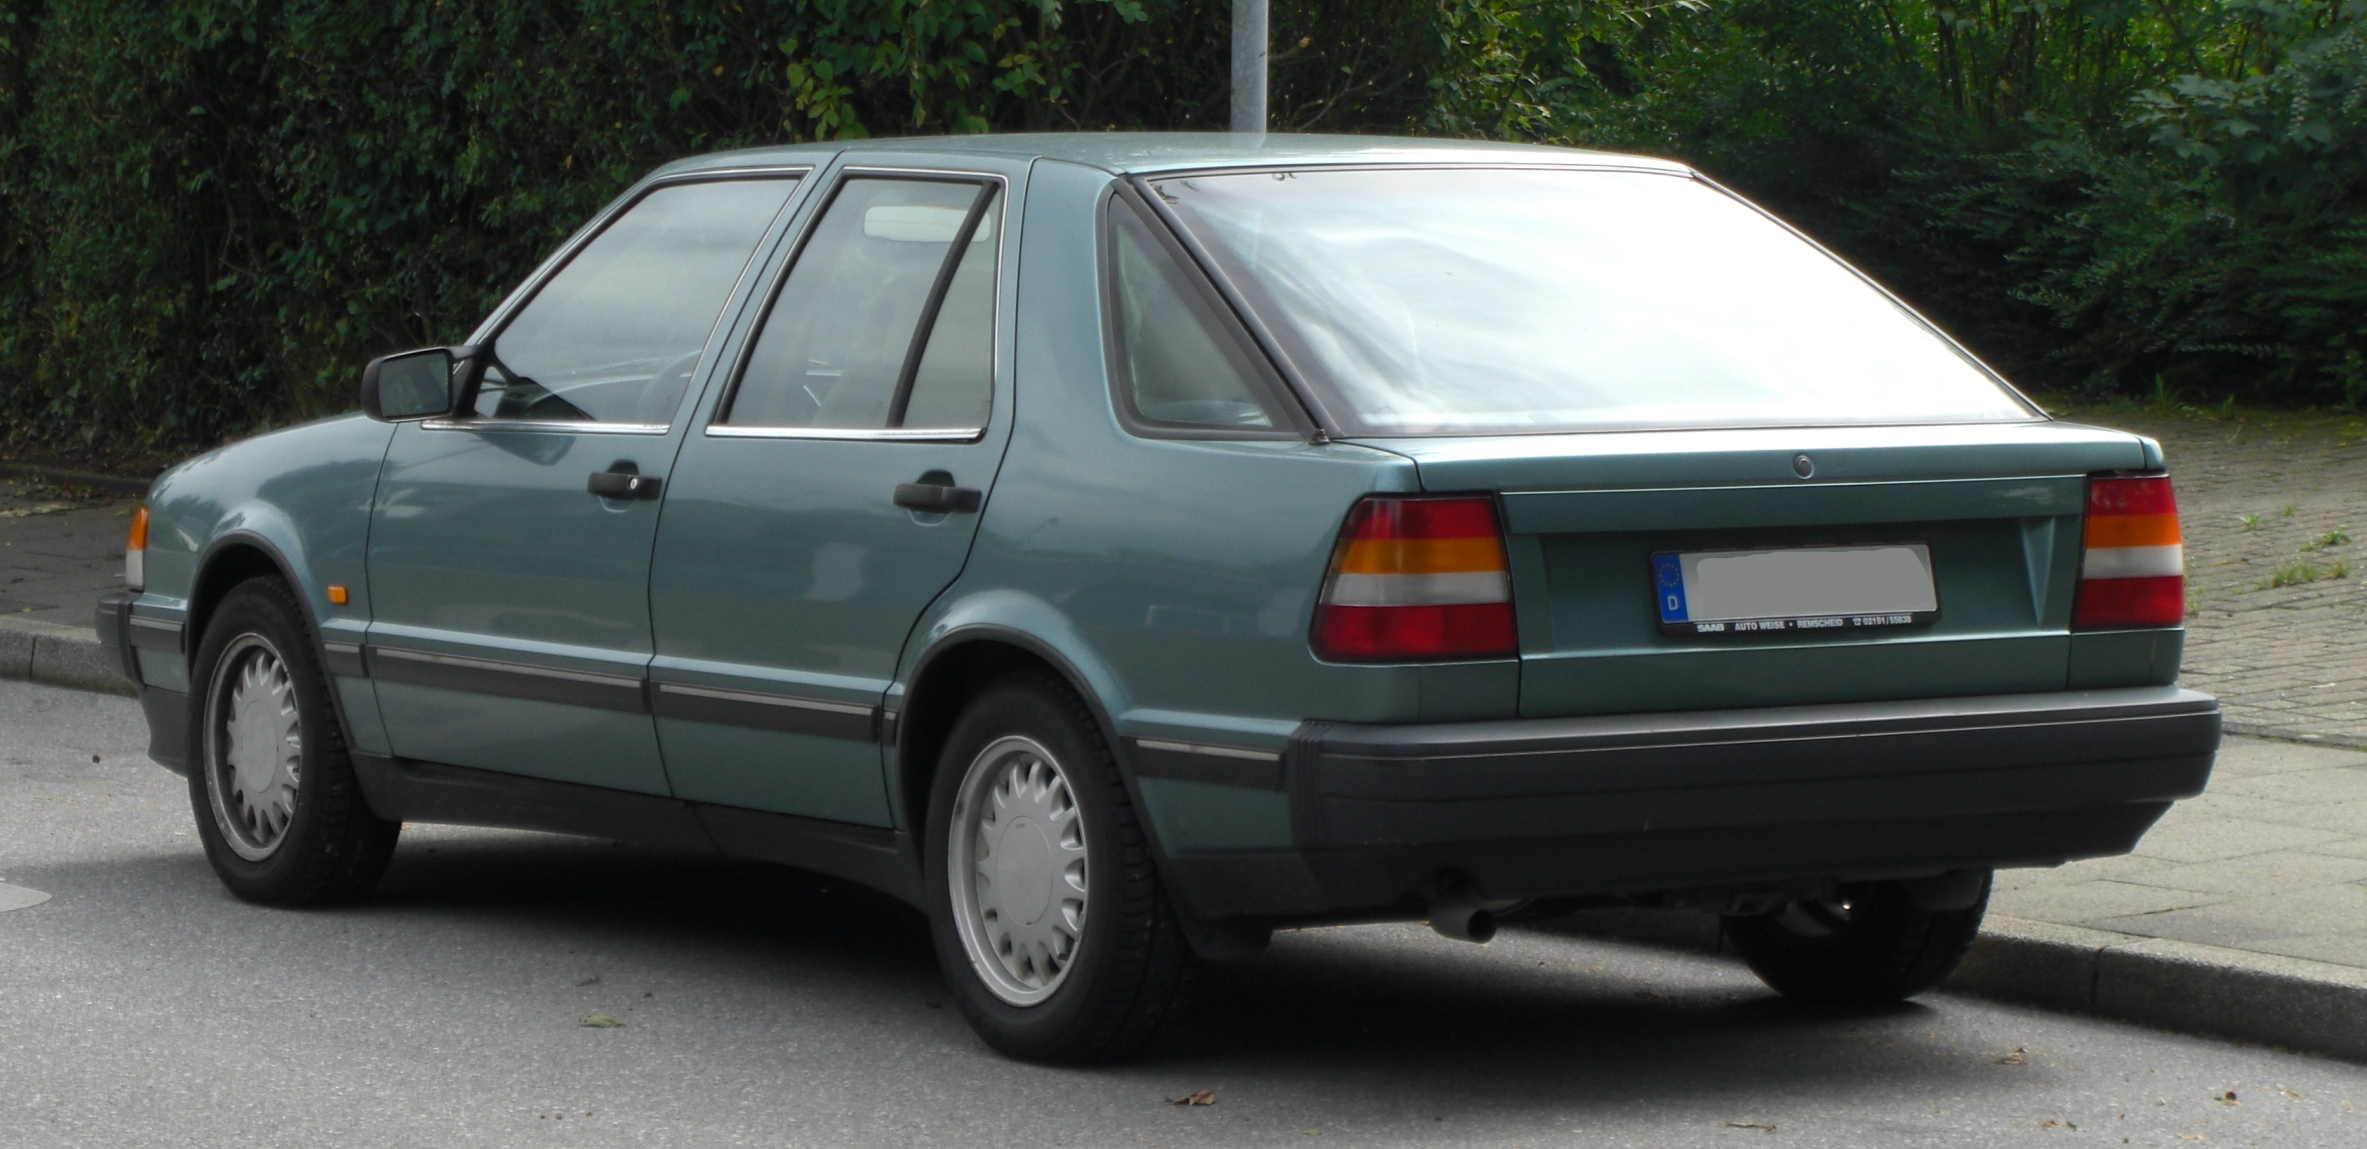 File:Saab 9000 rear.jpg - Wikimedia Commons